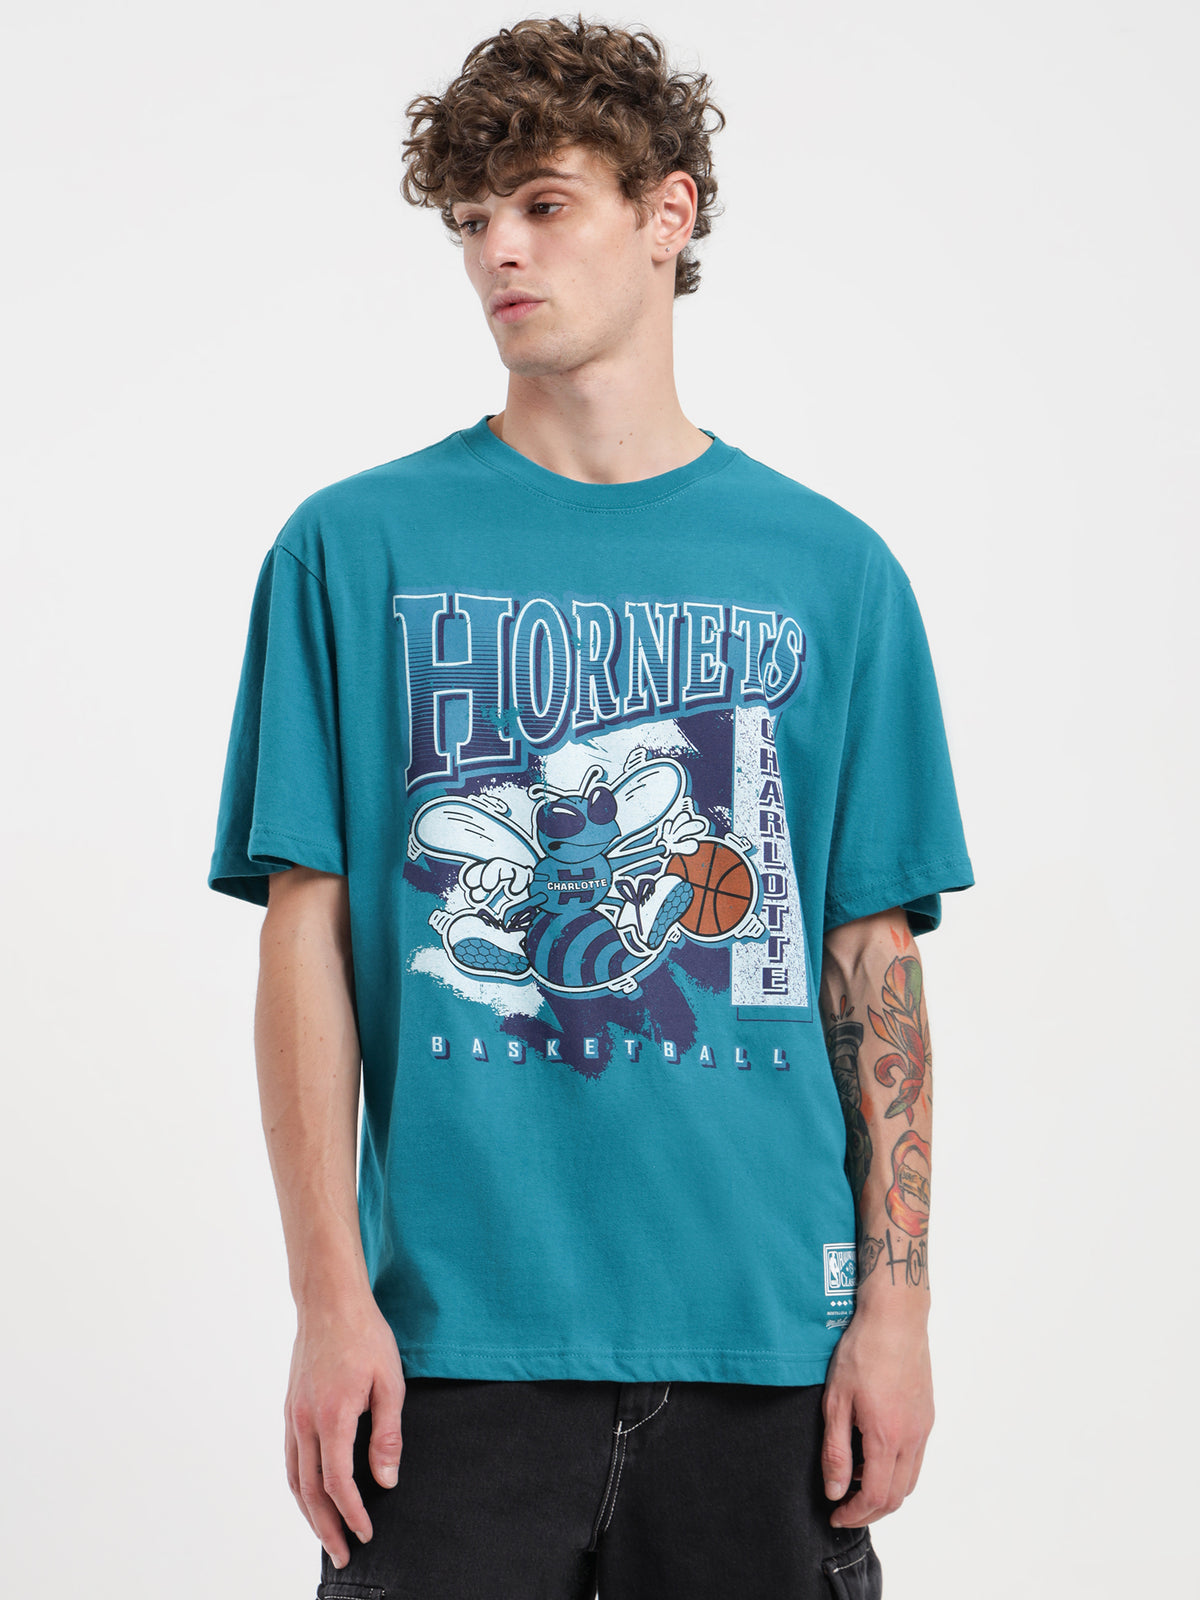 Charlotte Hornets T-Shirt in Teal